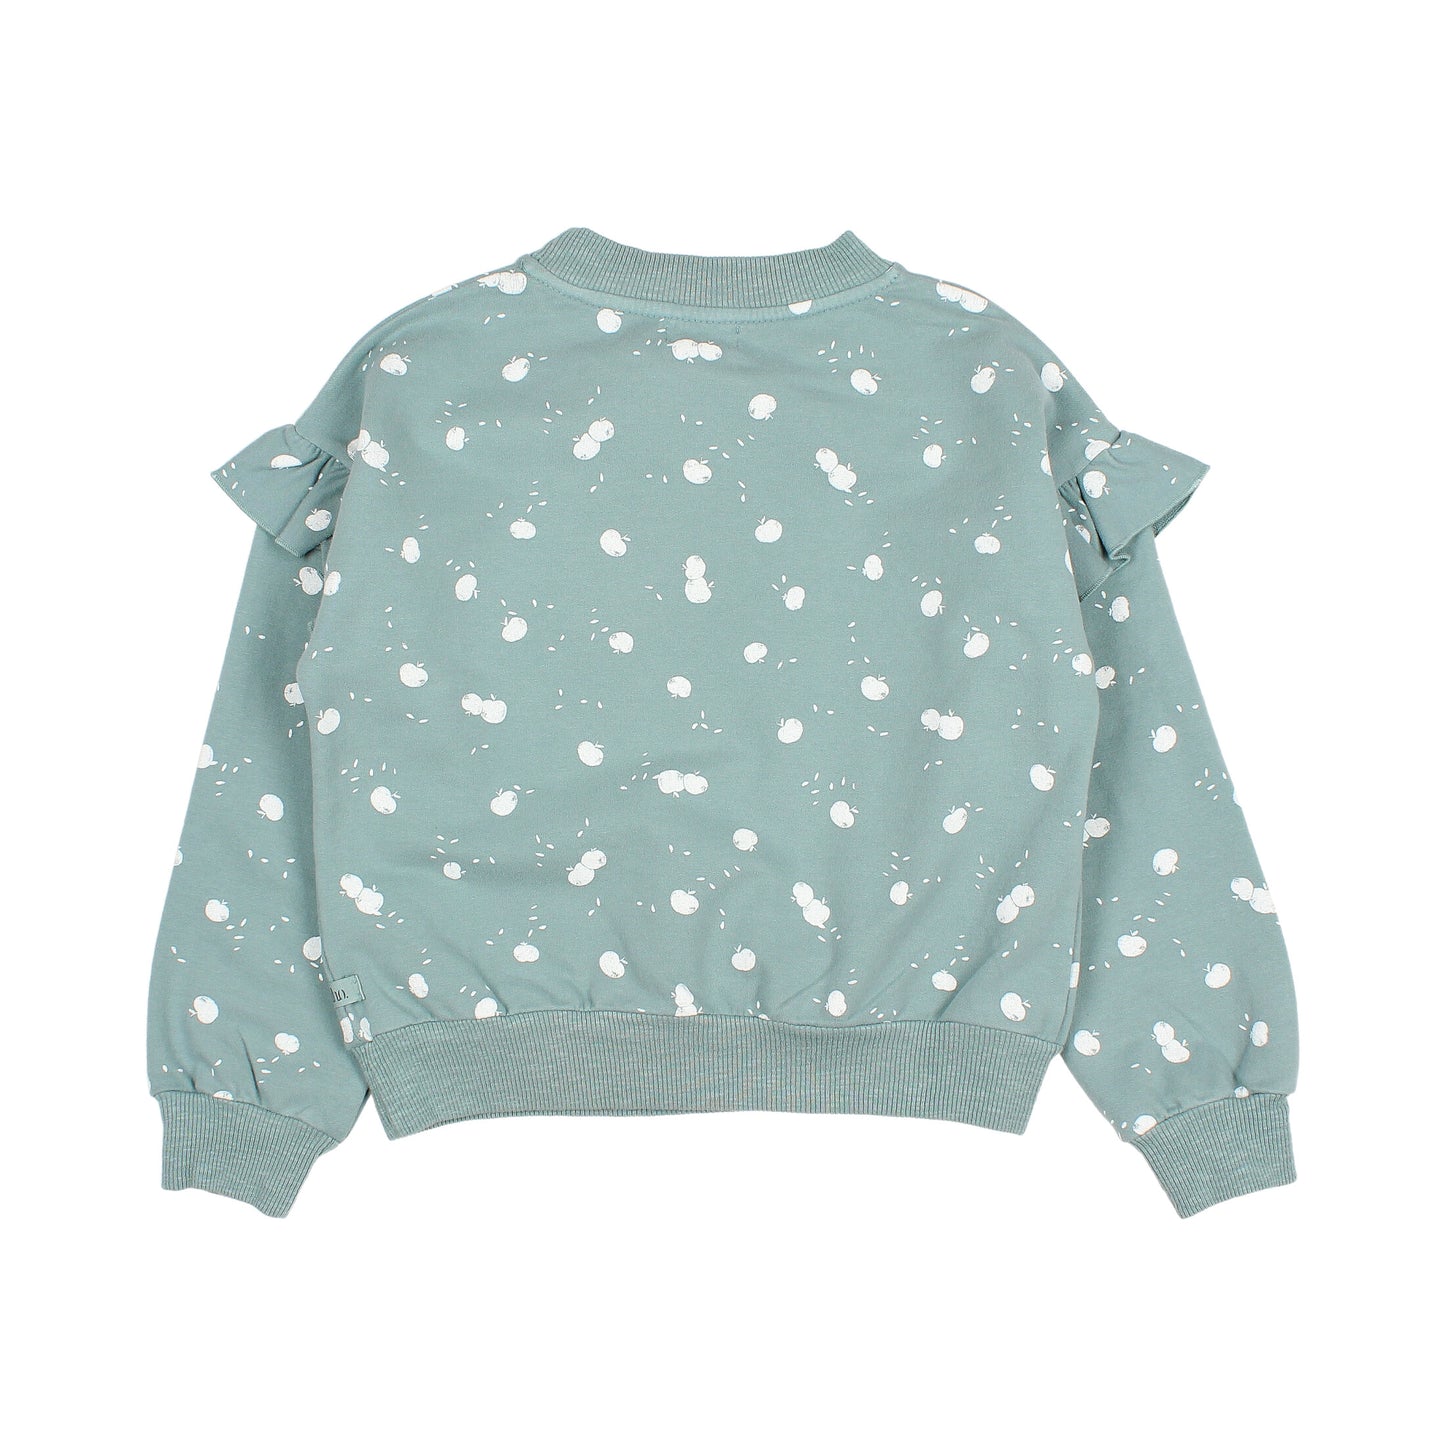 Sea Pine Apple Sweatshirt in Toddler